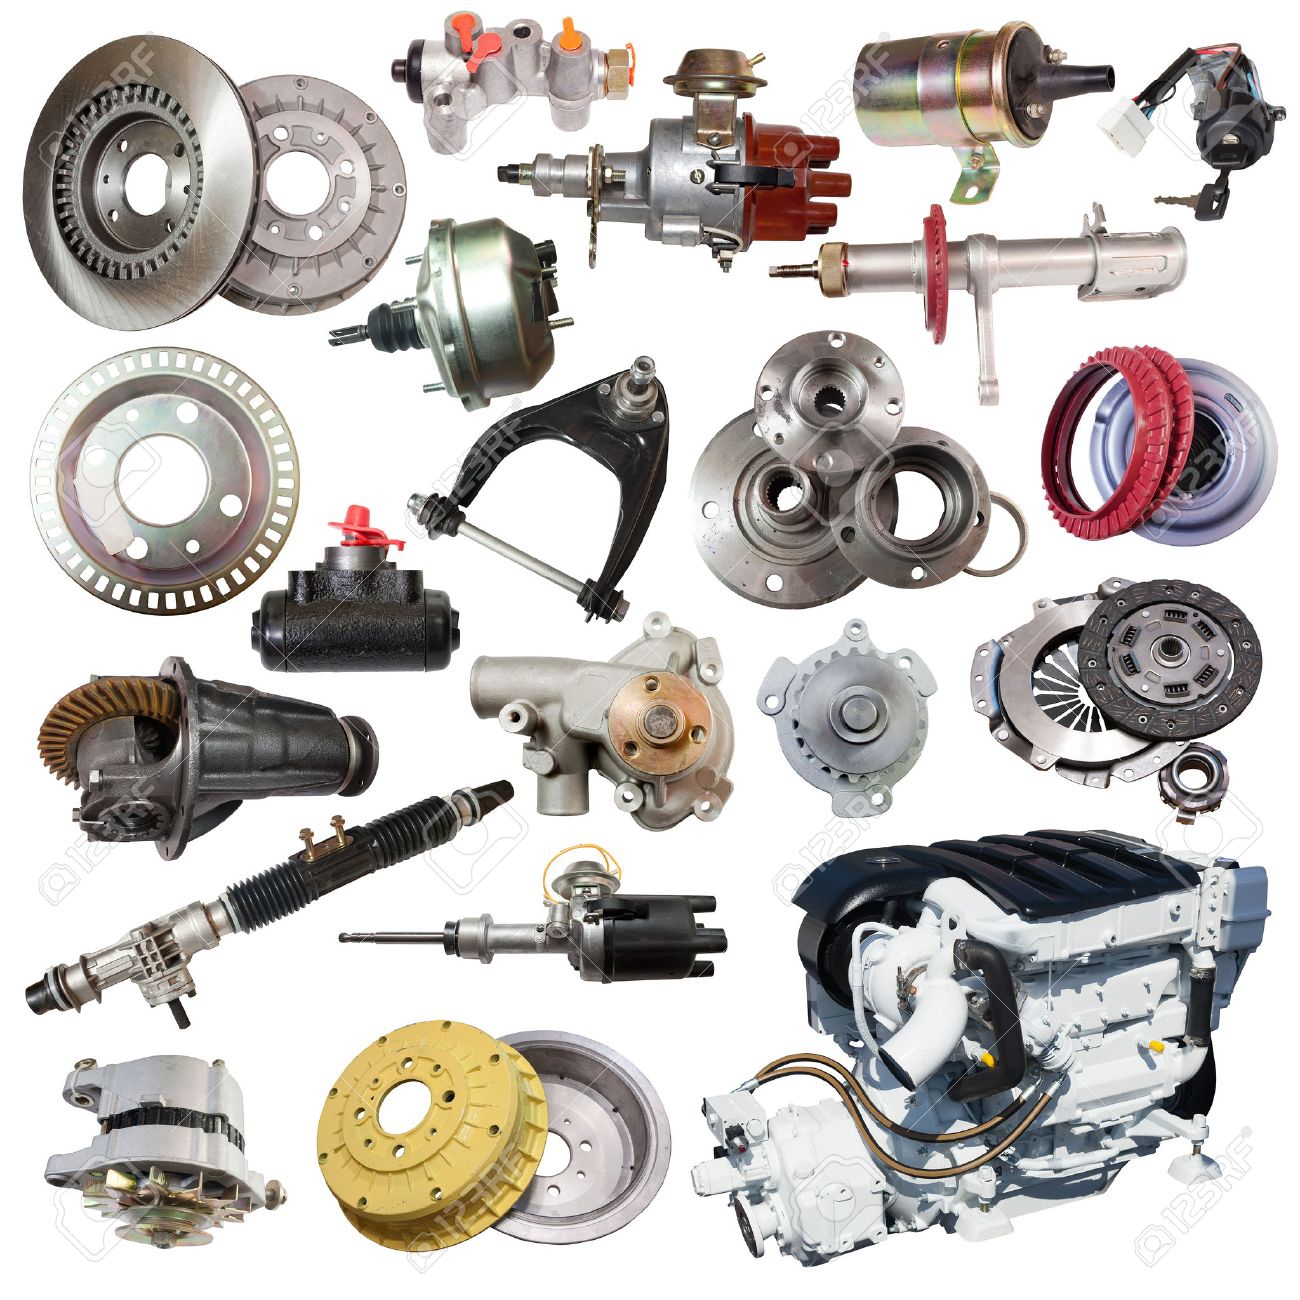 Auto parts manufactures Cover Image